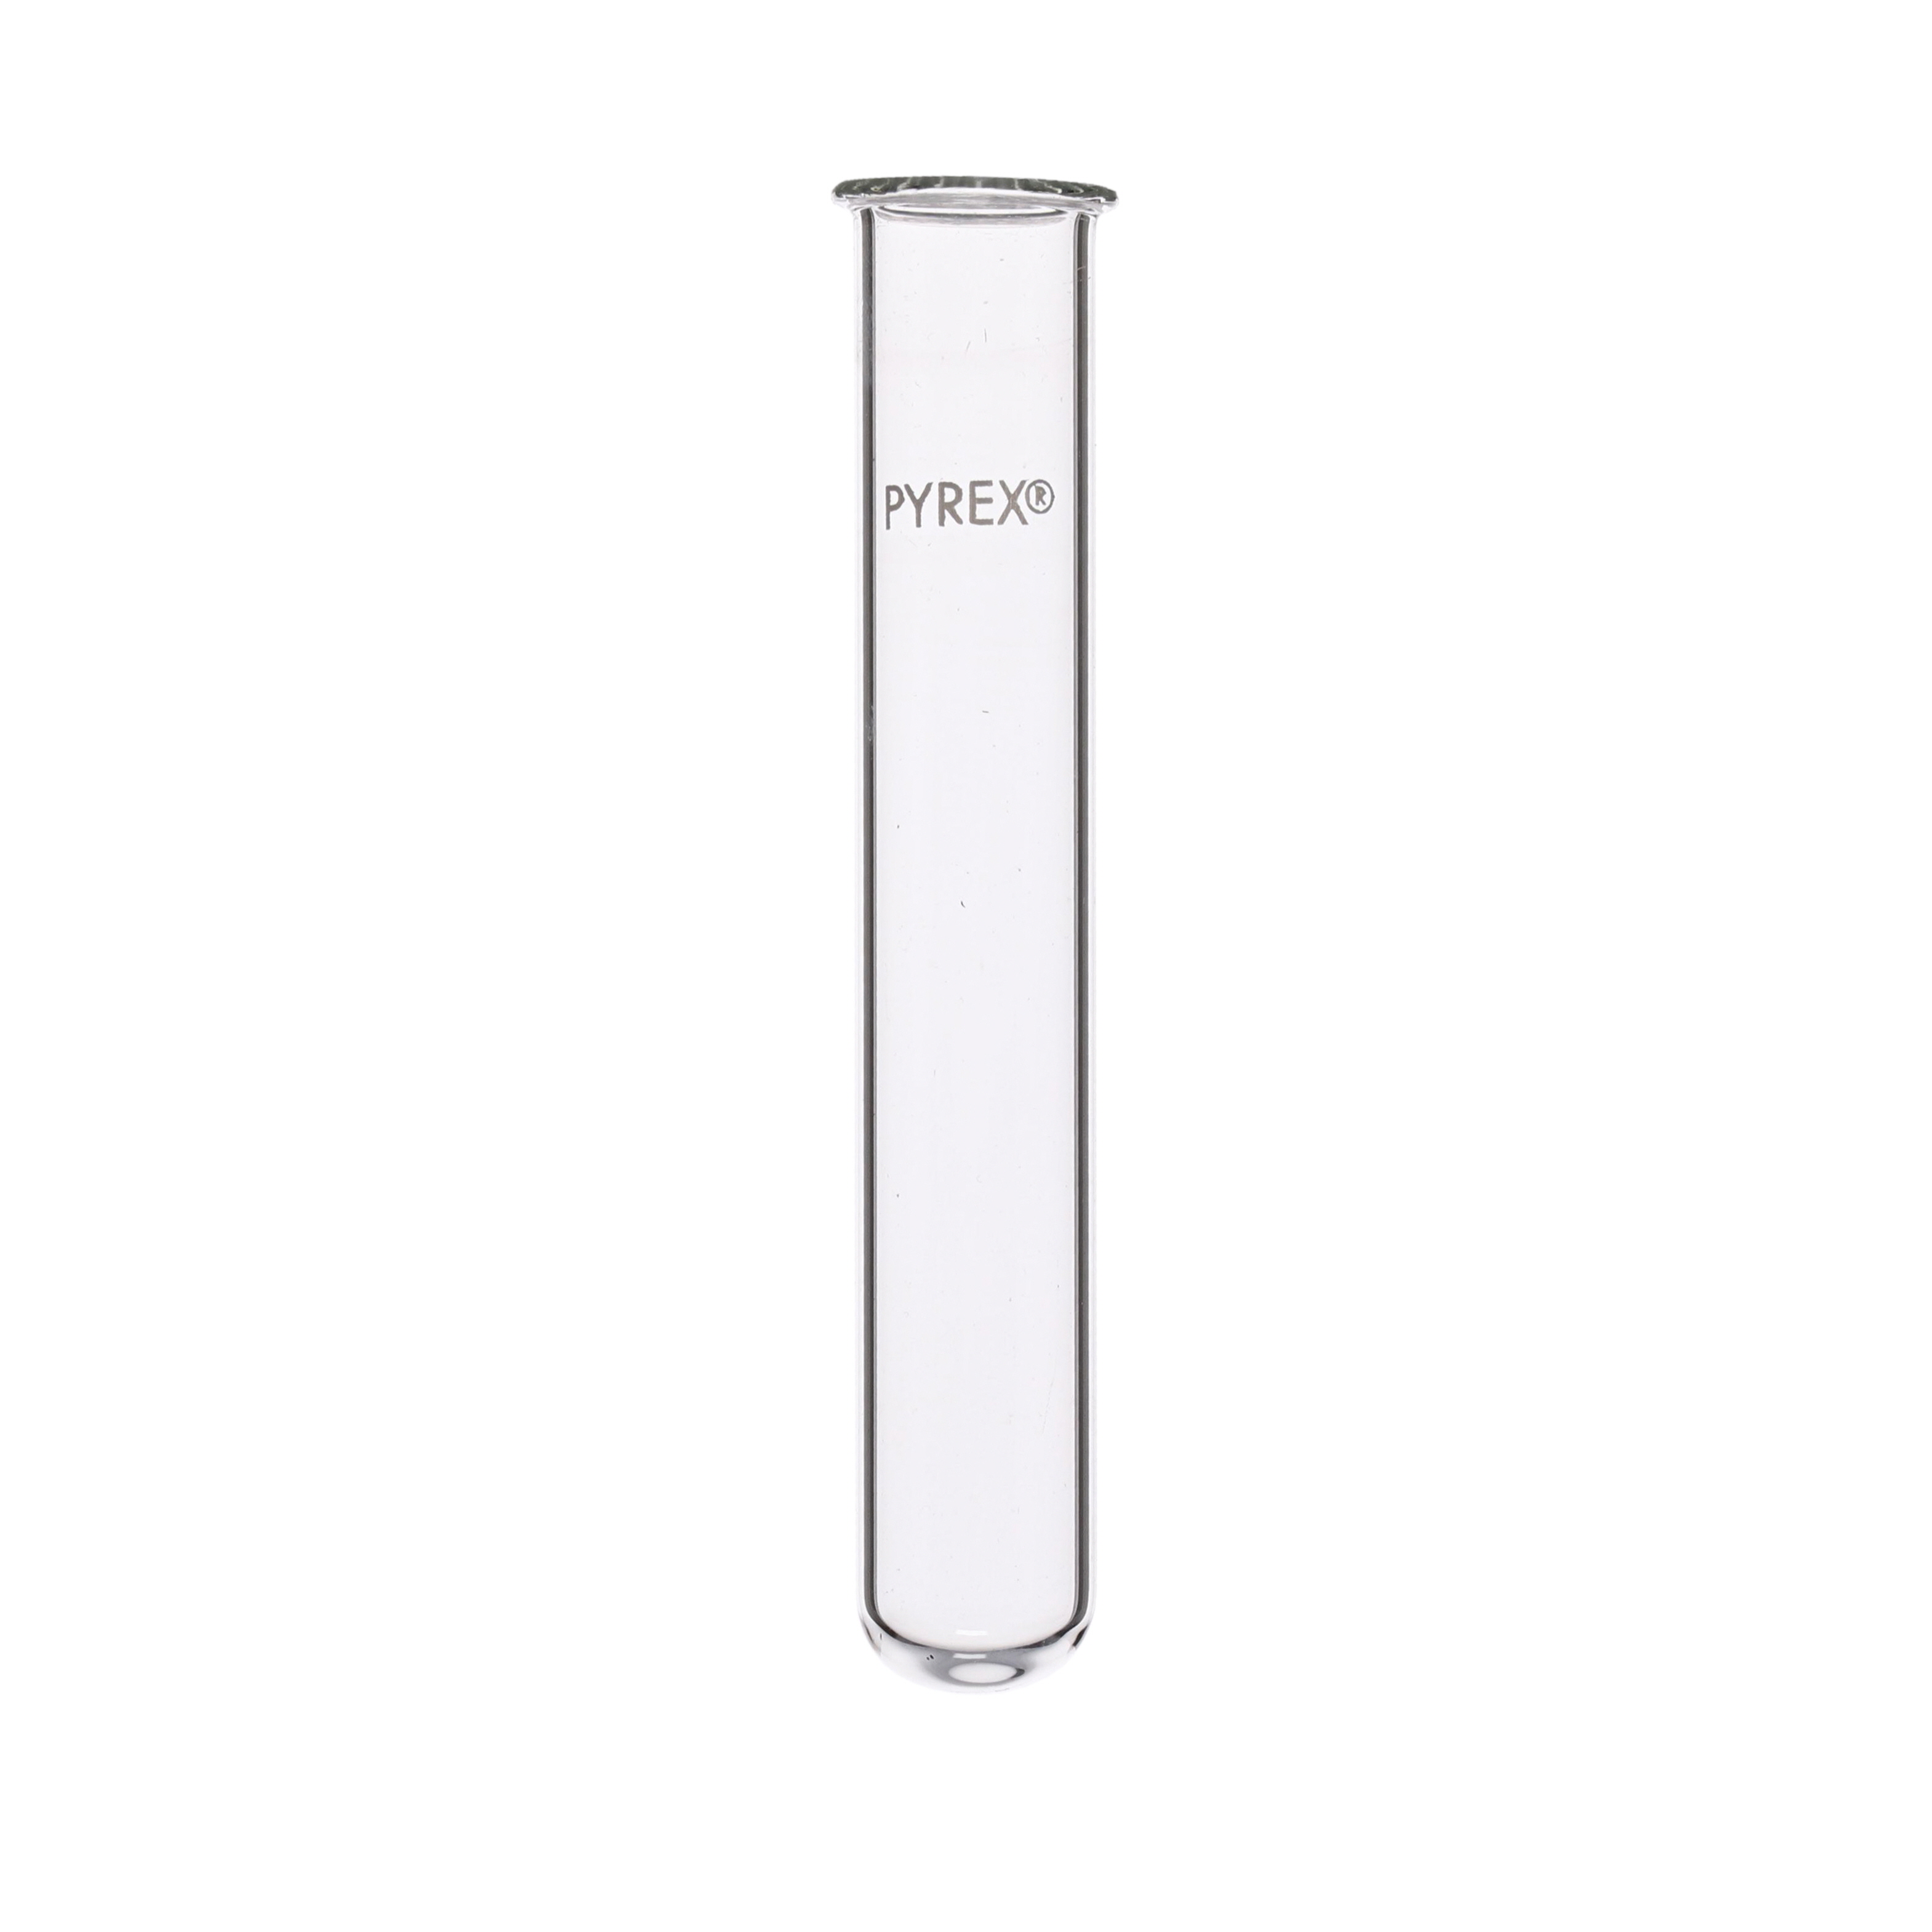 Pyrex® Test tubes, with rim, medium wall 50 mL